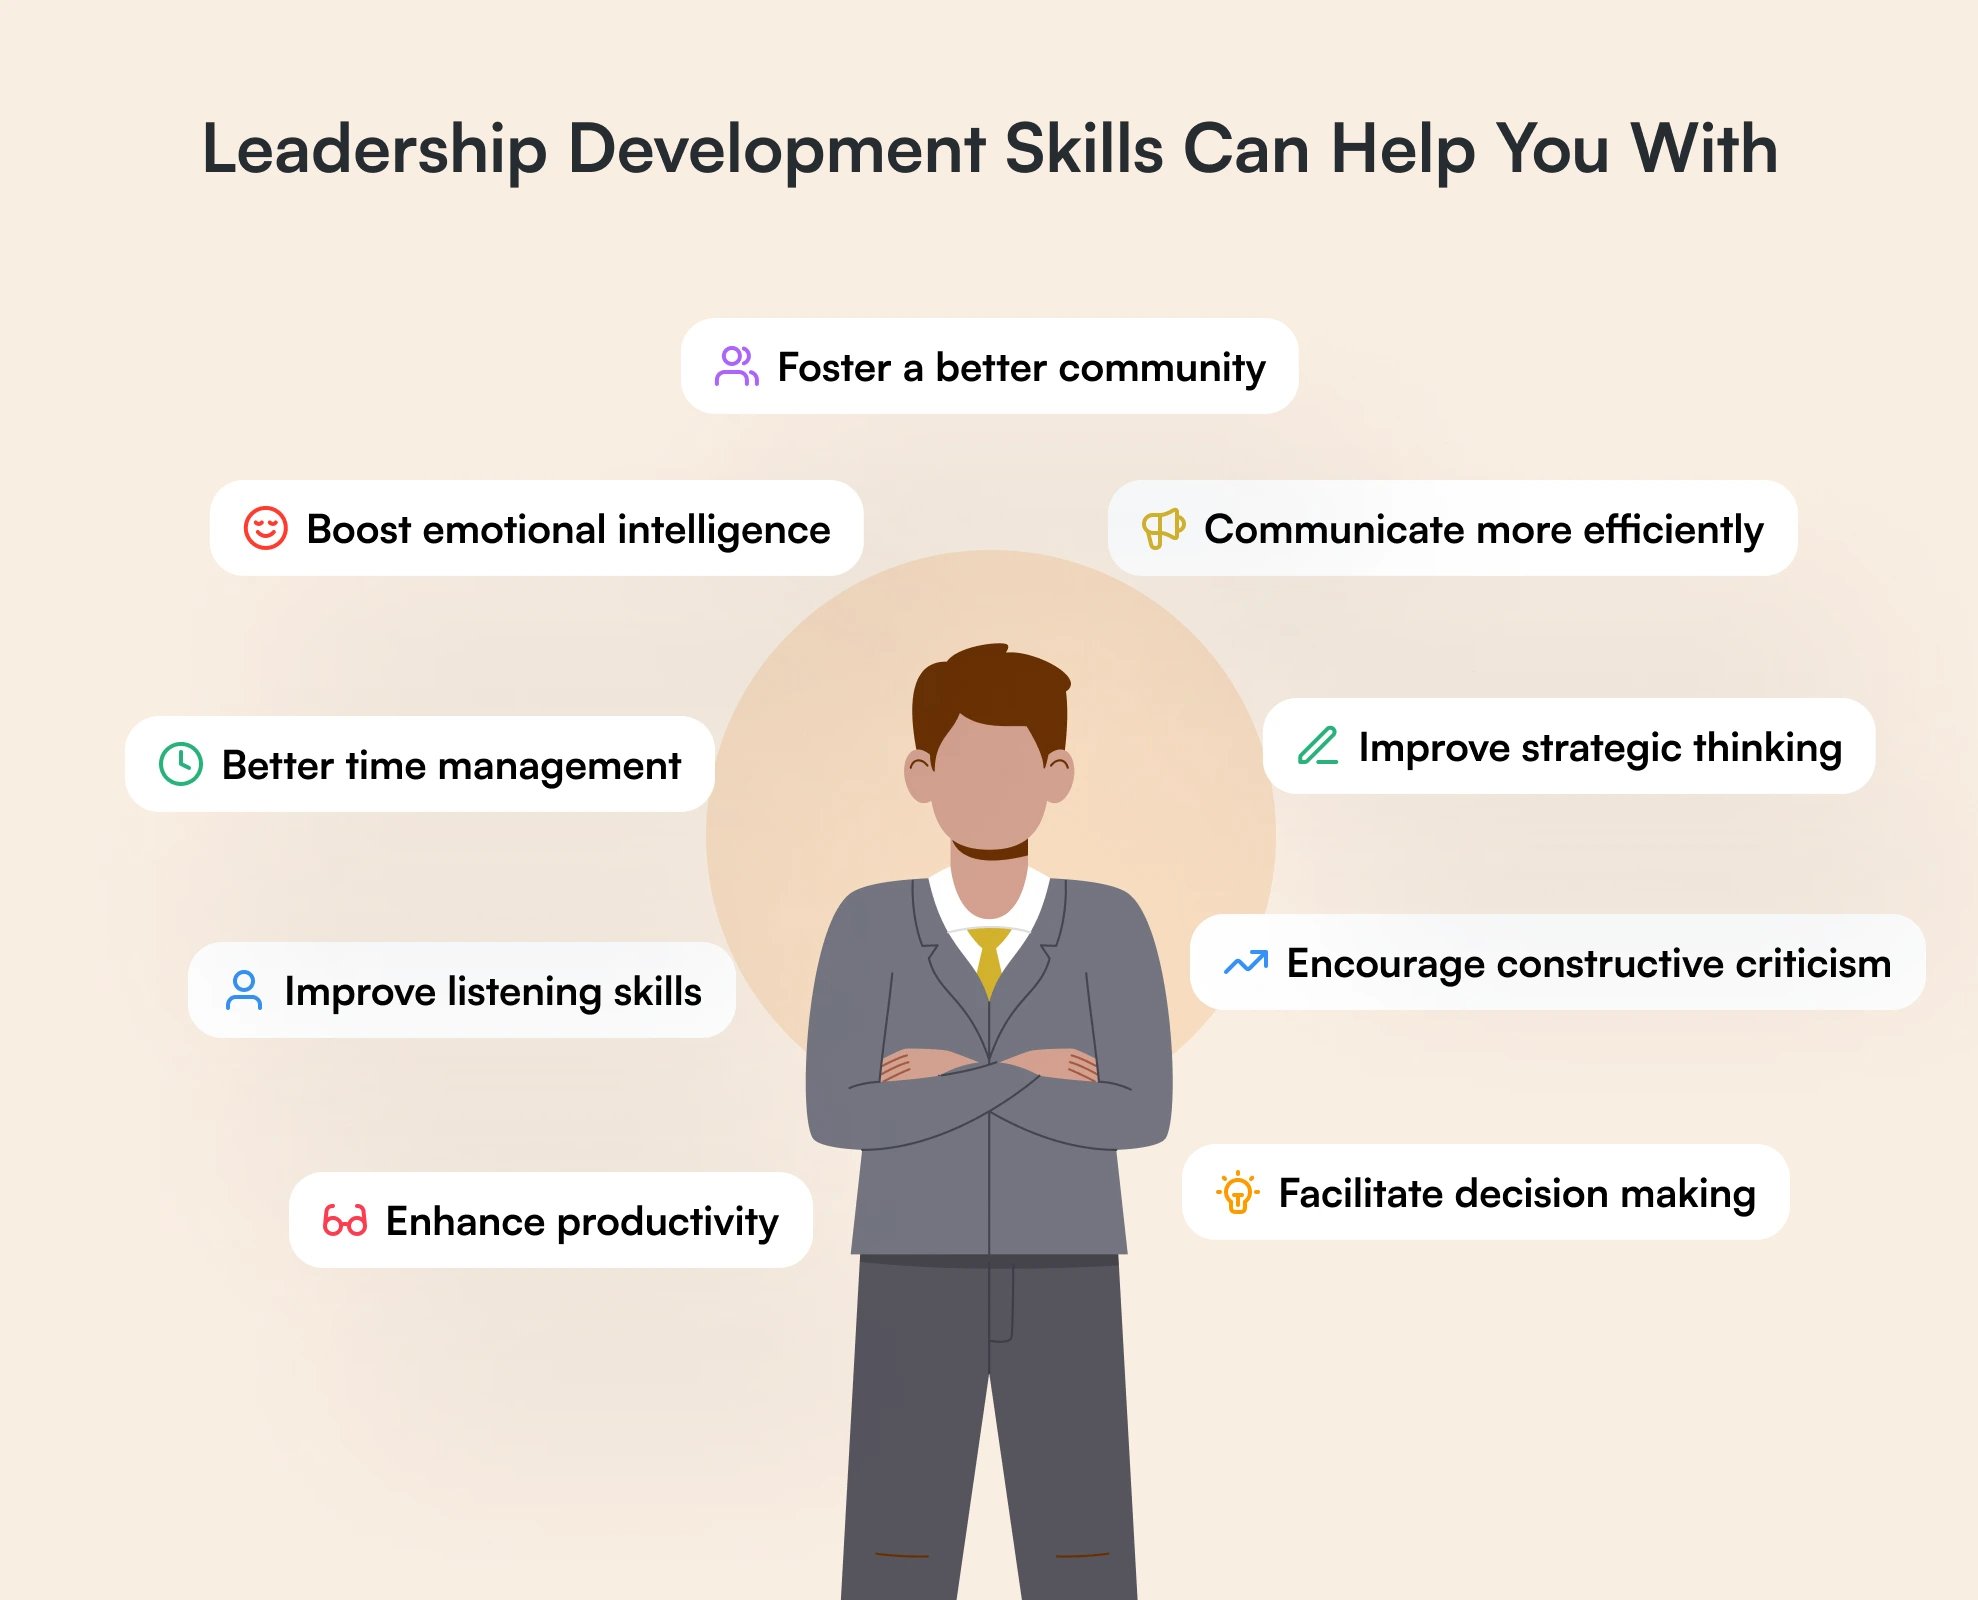 Leadership development skills can help you